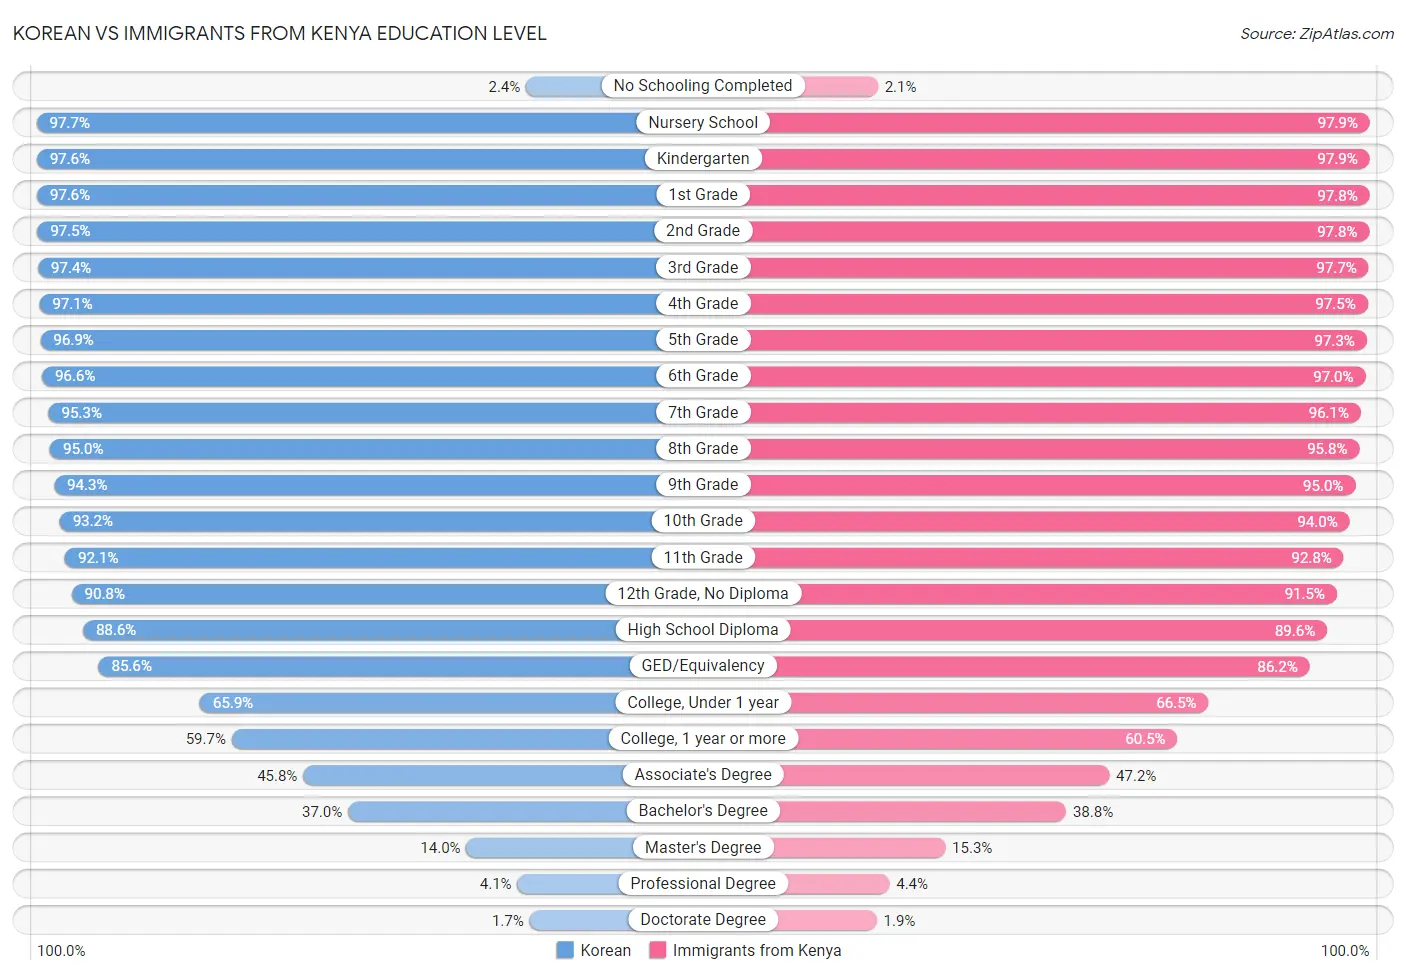 Korean vs Immigrants from Kenya Education Level